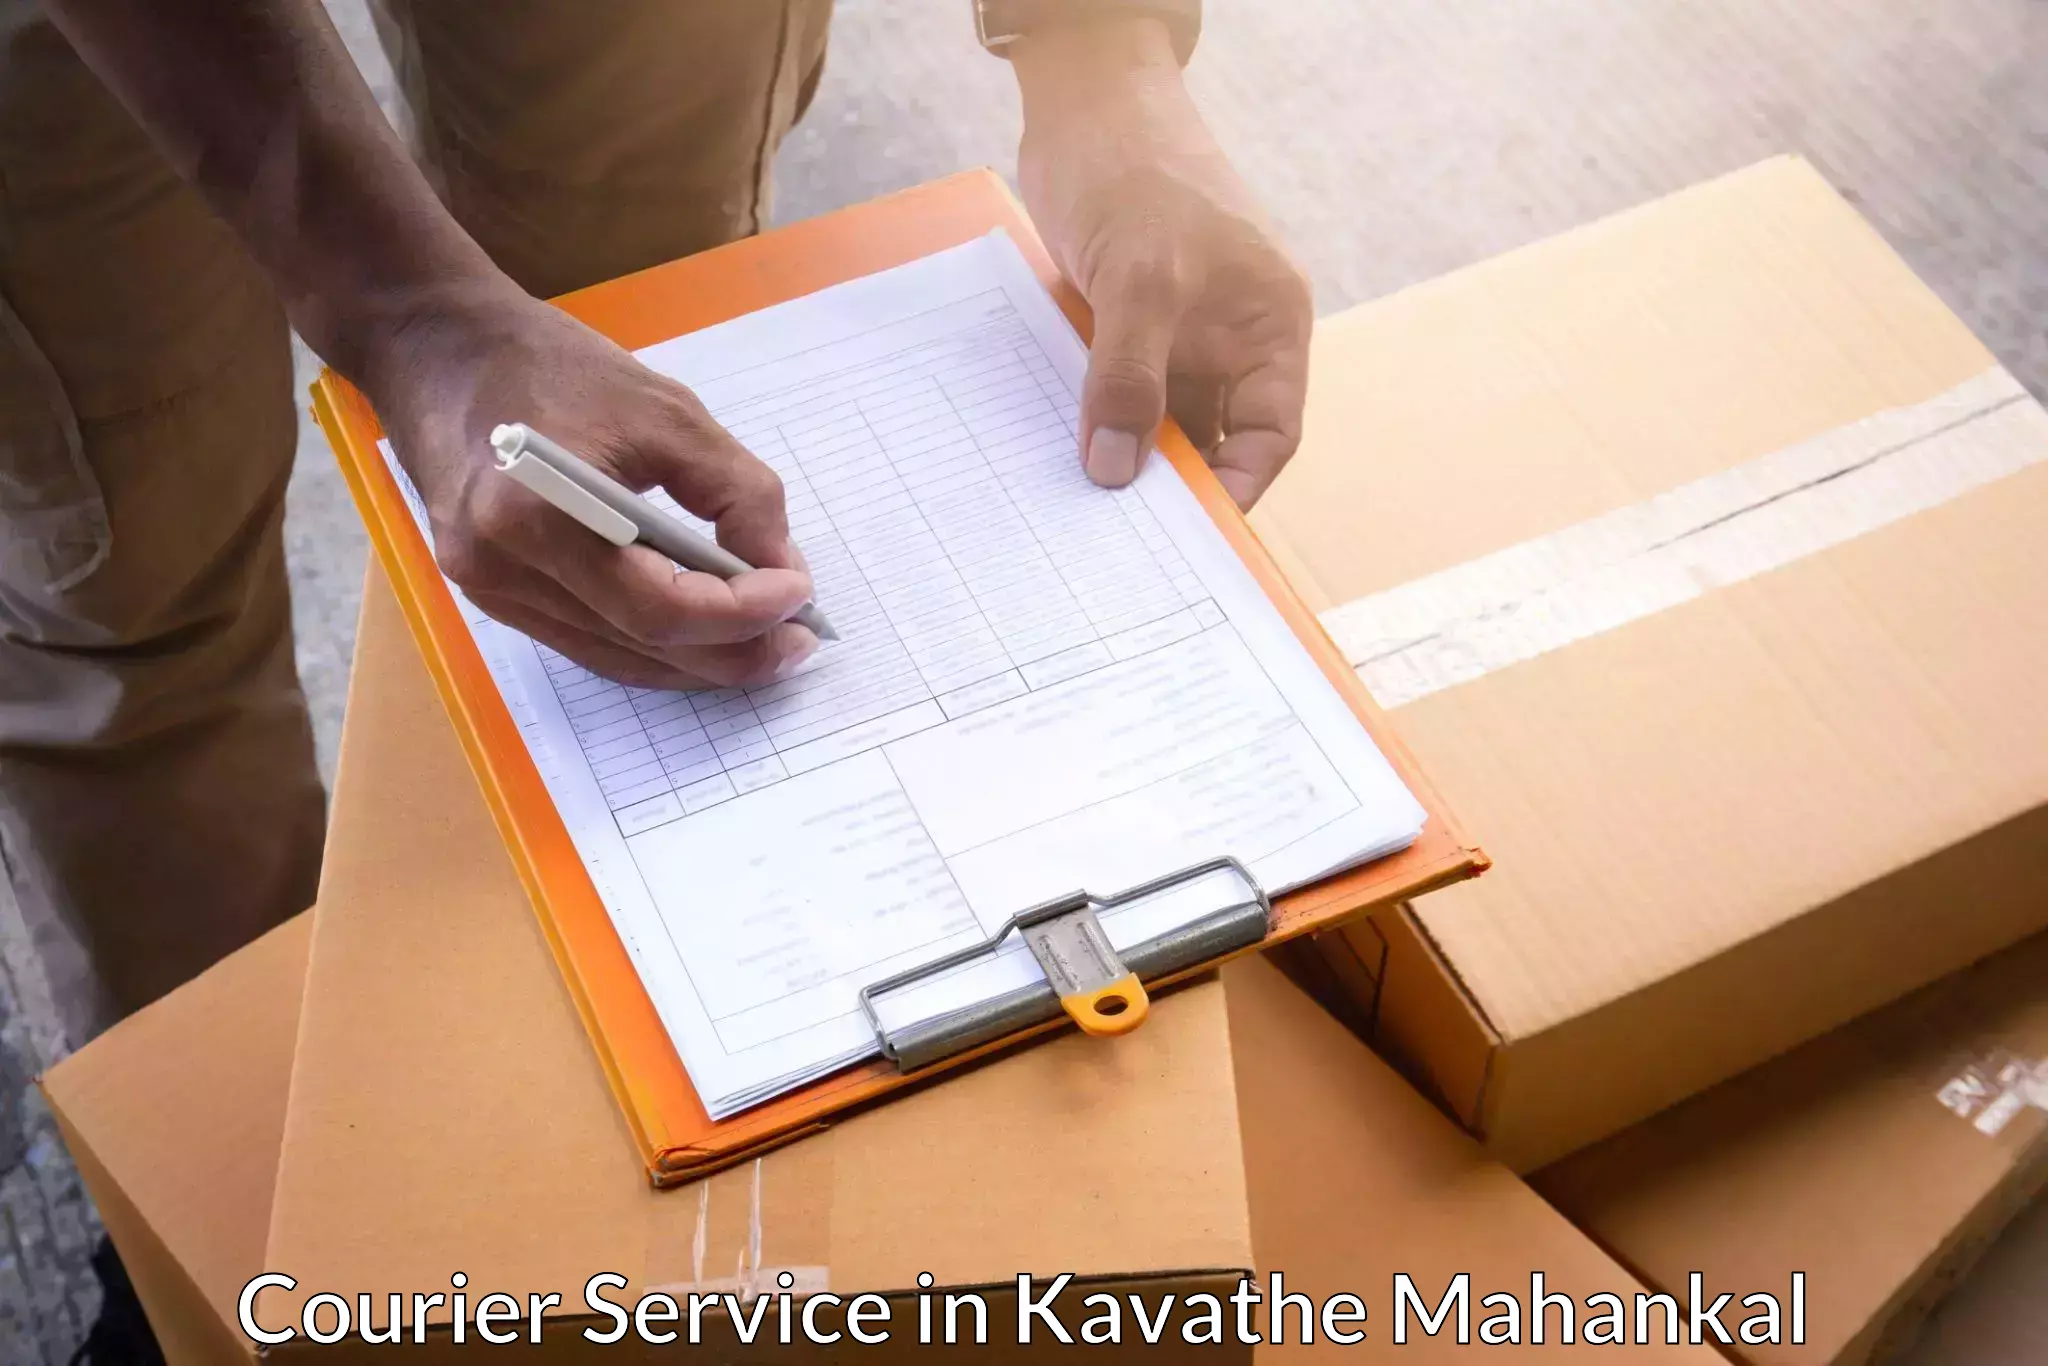 Affordable logistics services in Kavathe Mahankal